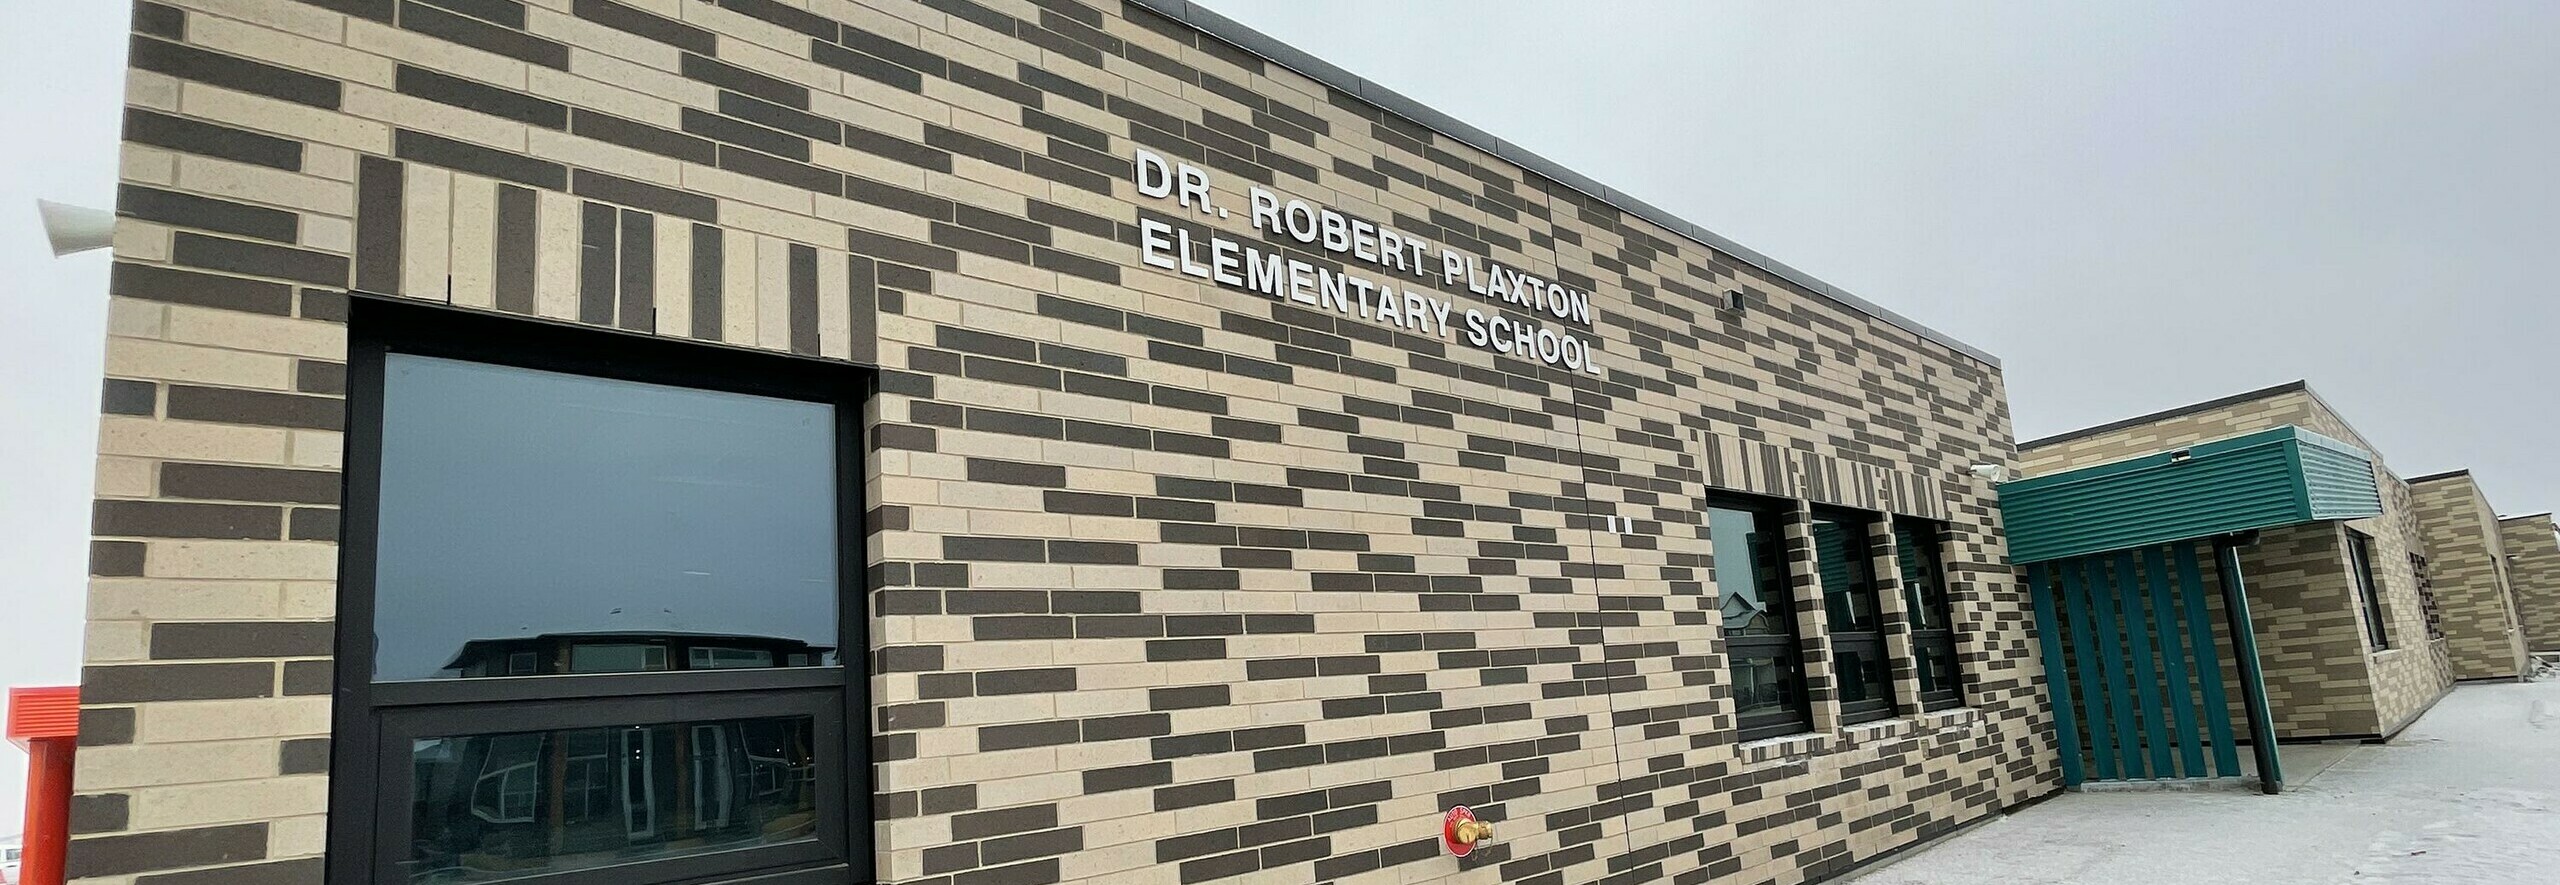 Dr. Robert Plaxton Elementary School Banner Photo